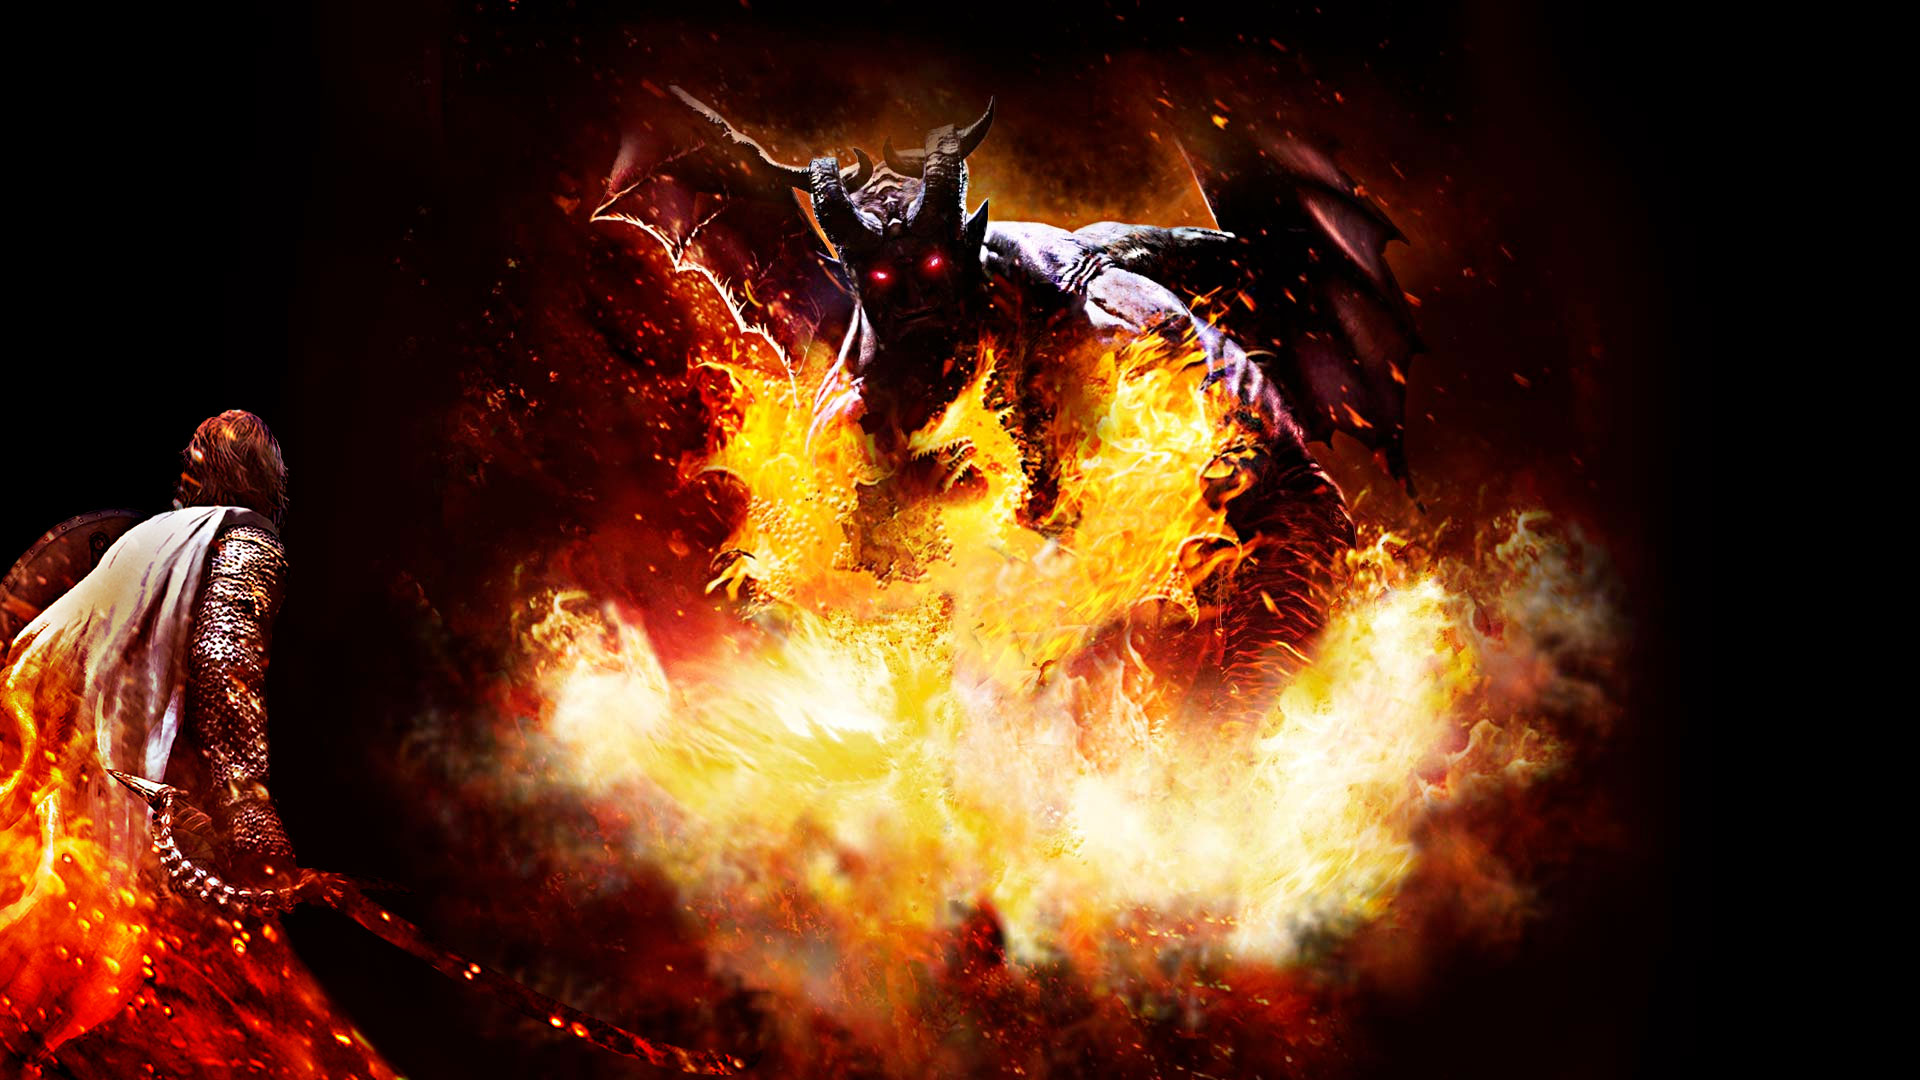 dragon39s dogma dark arisen review